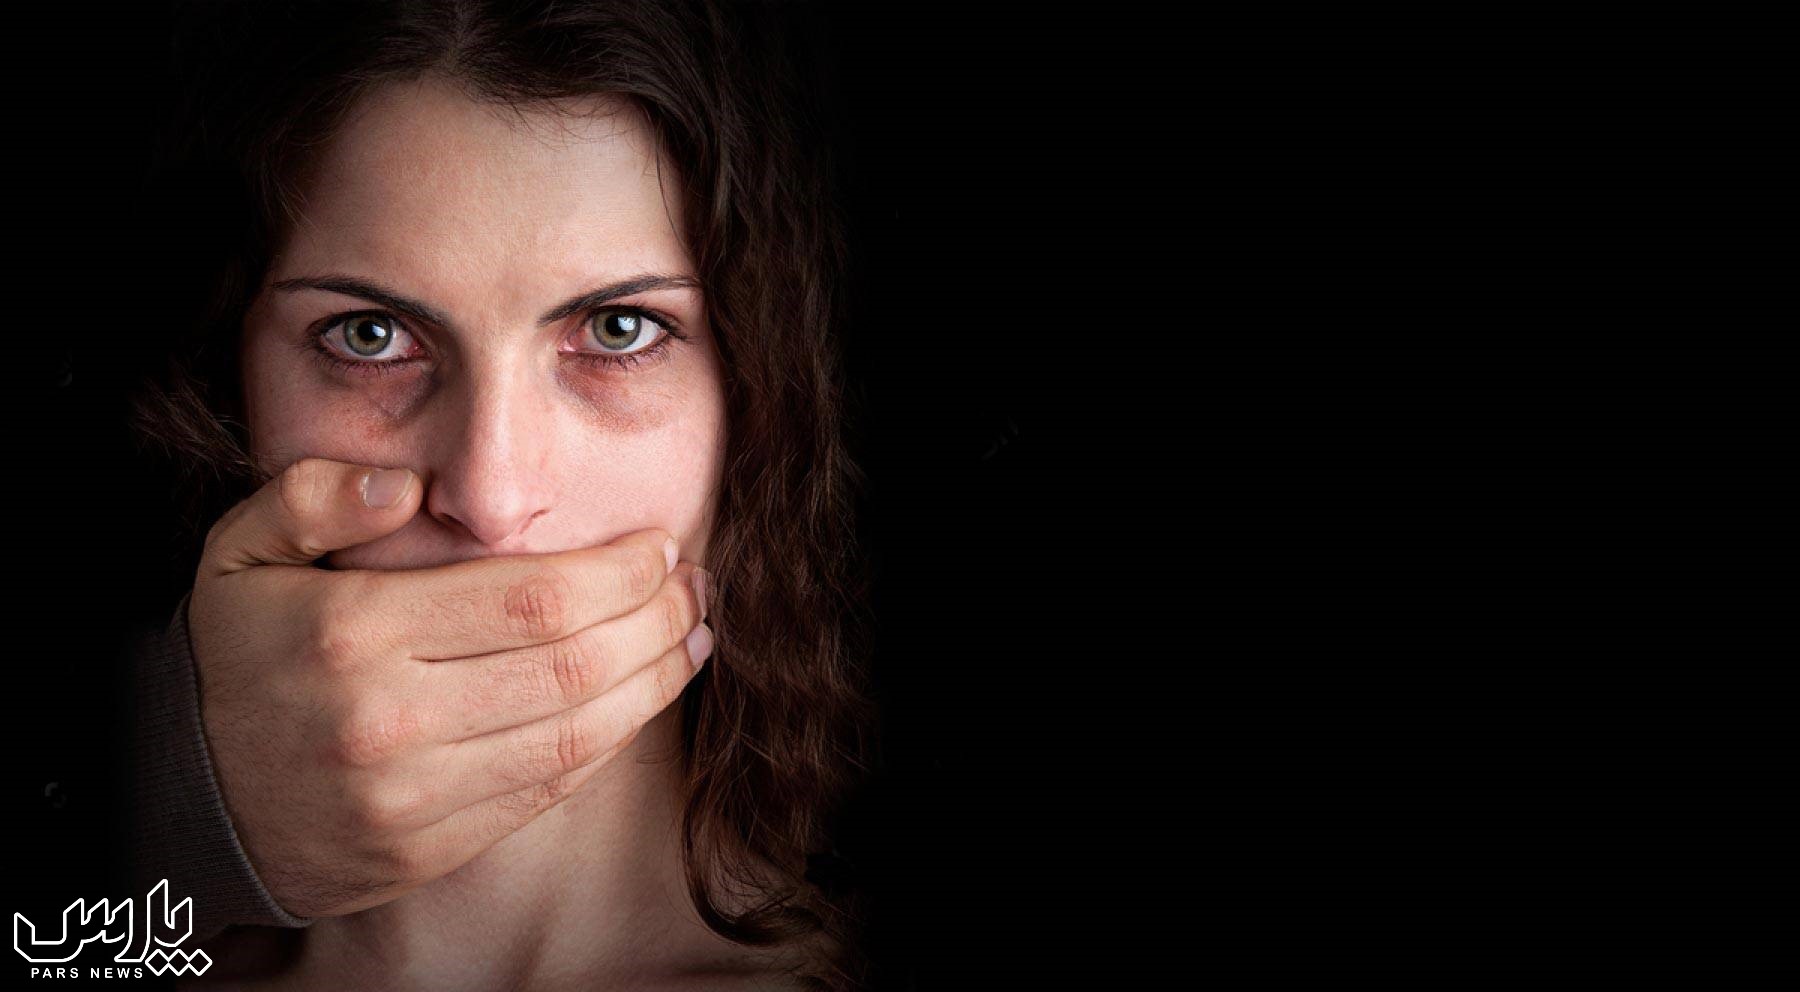 خشونت علیه زنان - مقابله با خشونت خانگی